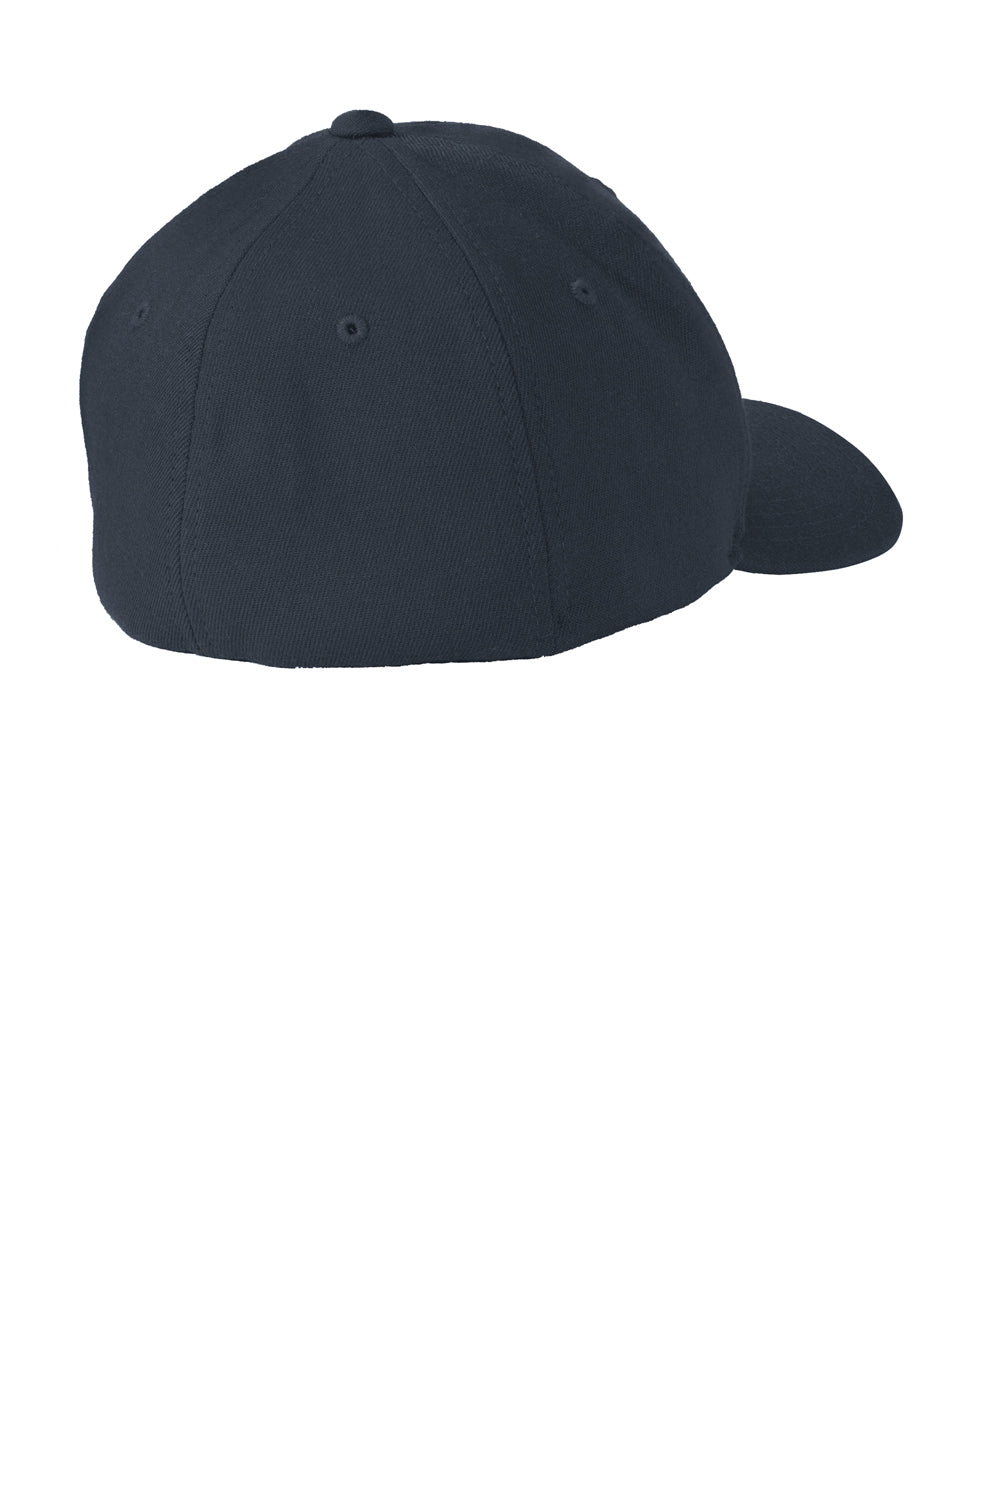 Port Authority C928 Flexfit Wool Blend Hat Dark Navy Blue Back